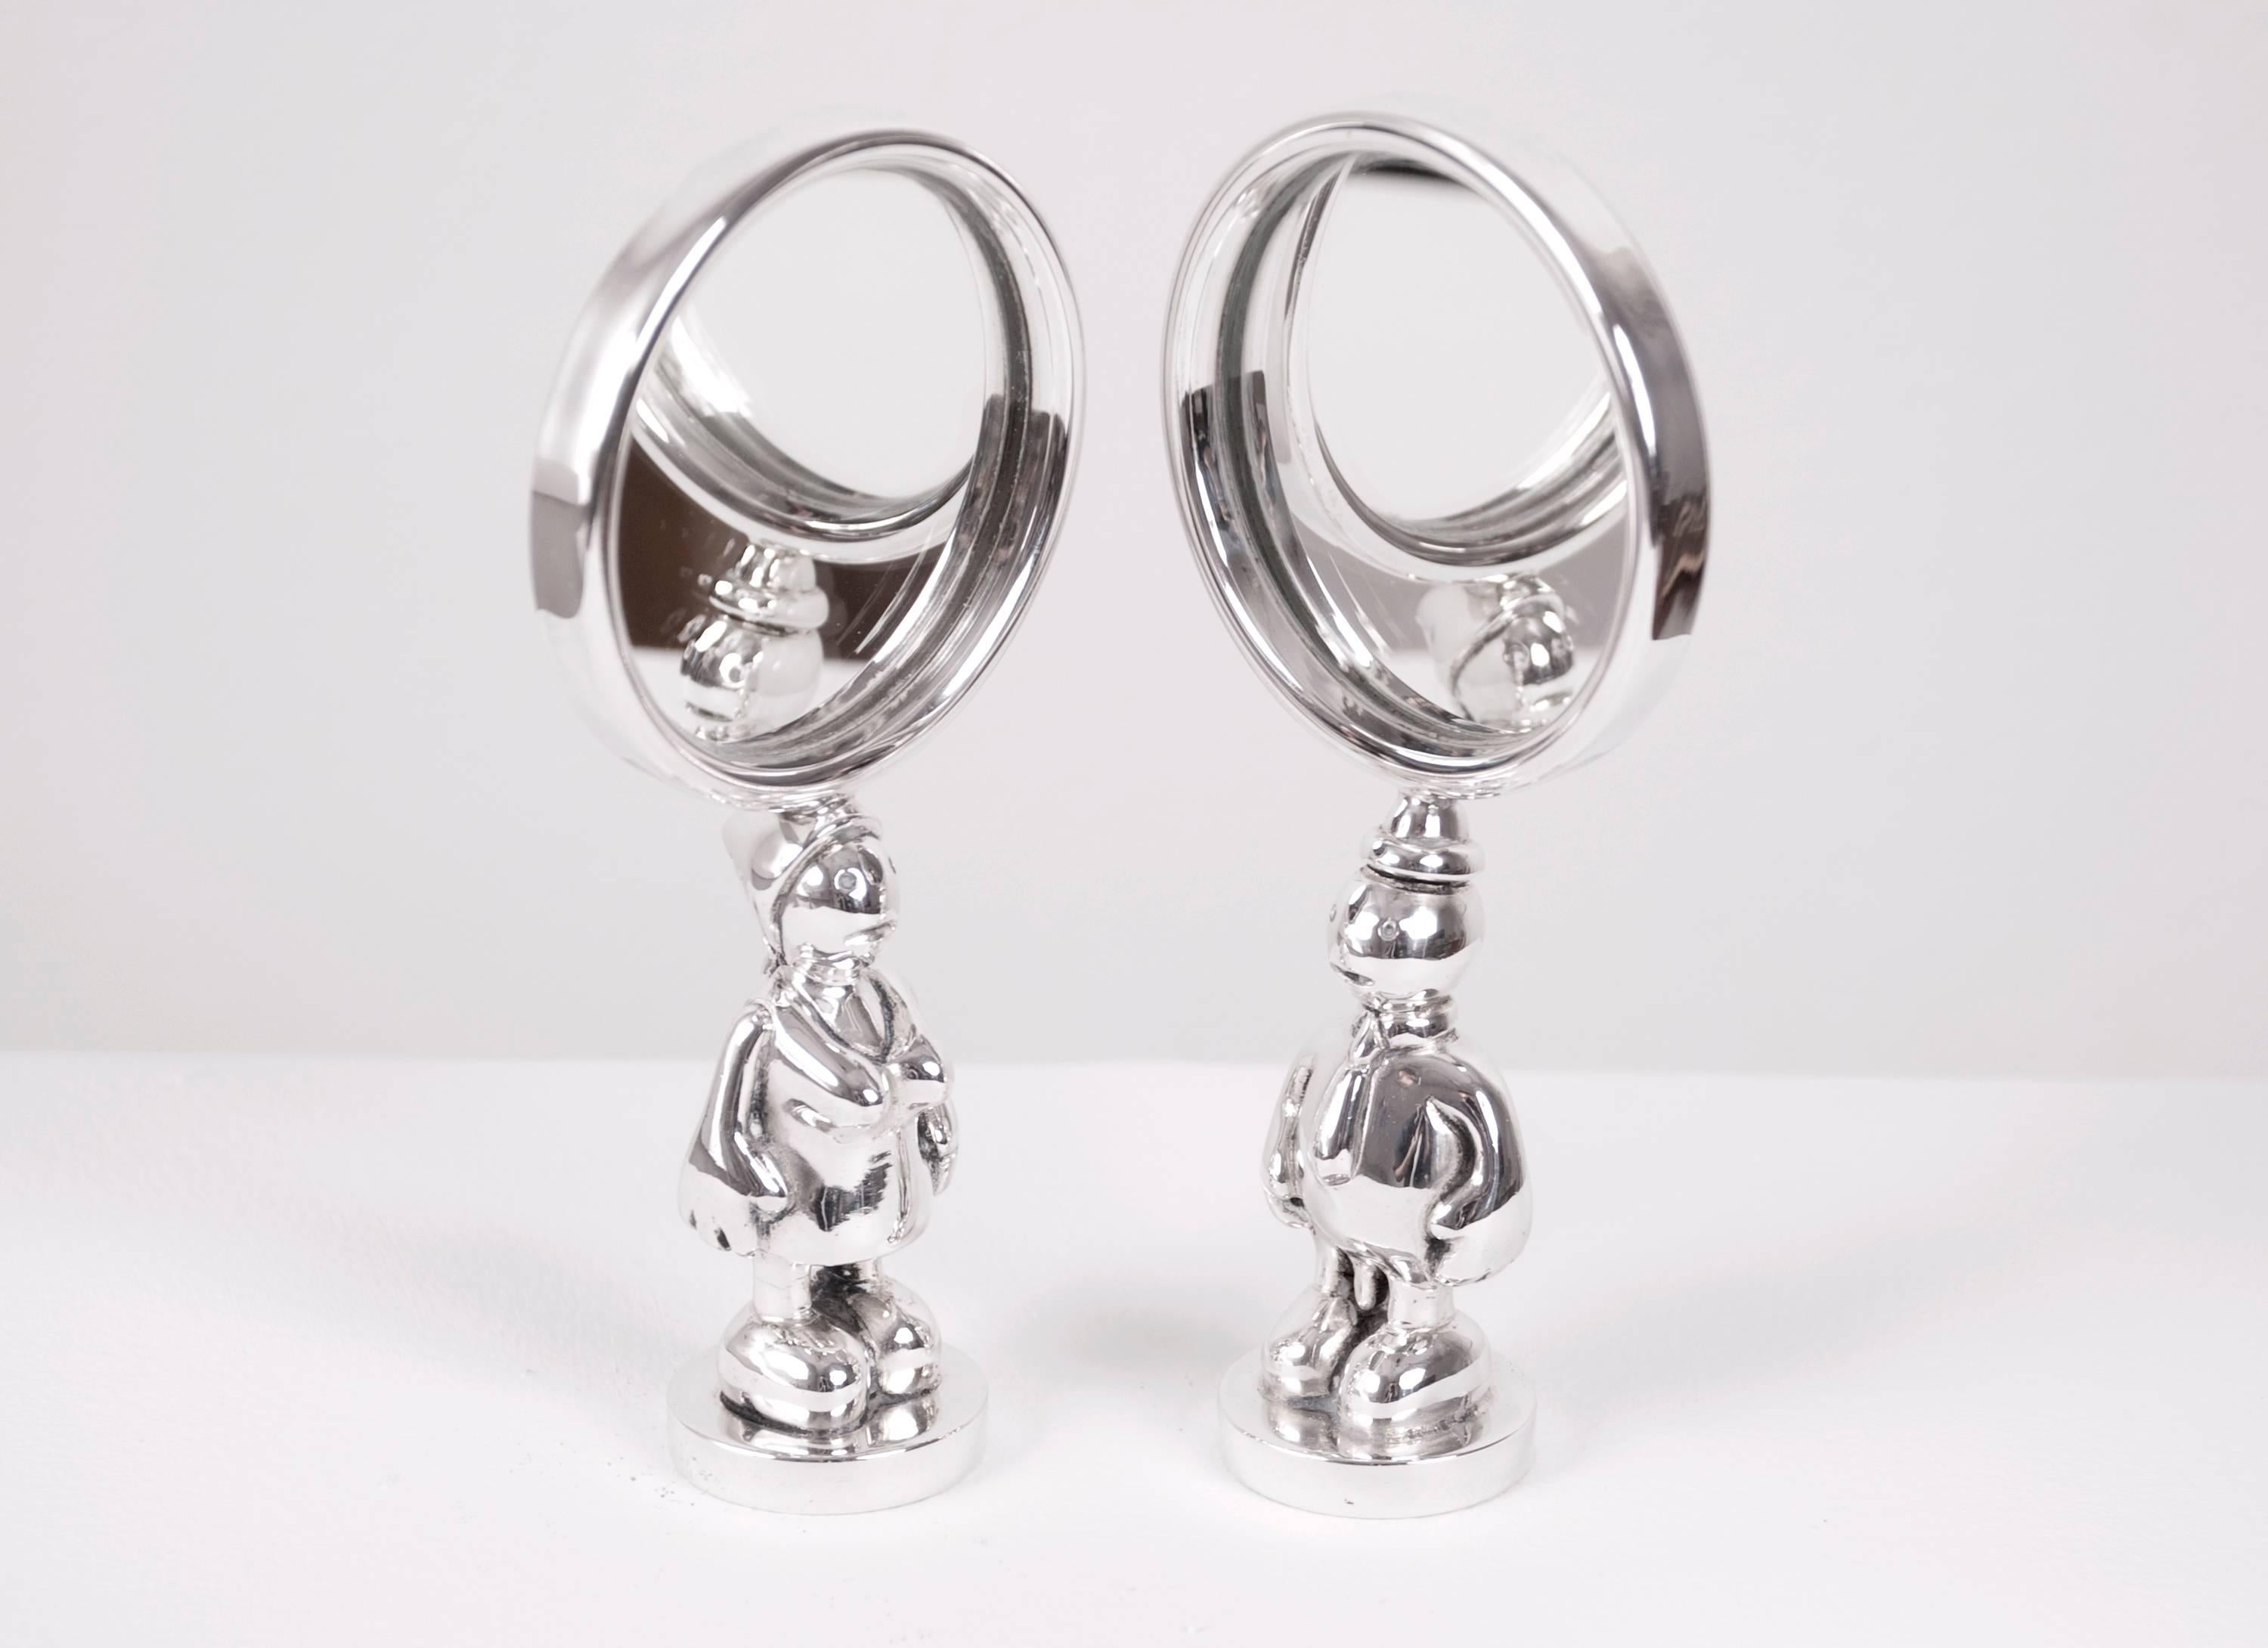 Tom Otterness Figurative Sculpture - Mirrors: Worker (Male & Female)